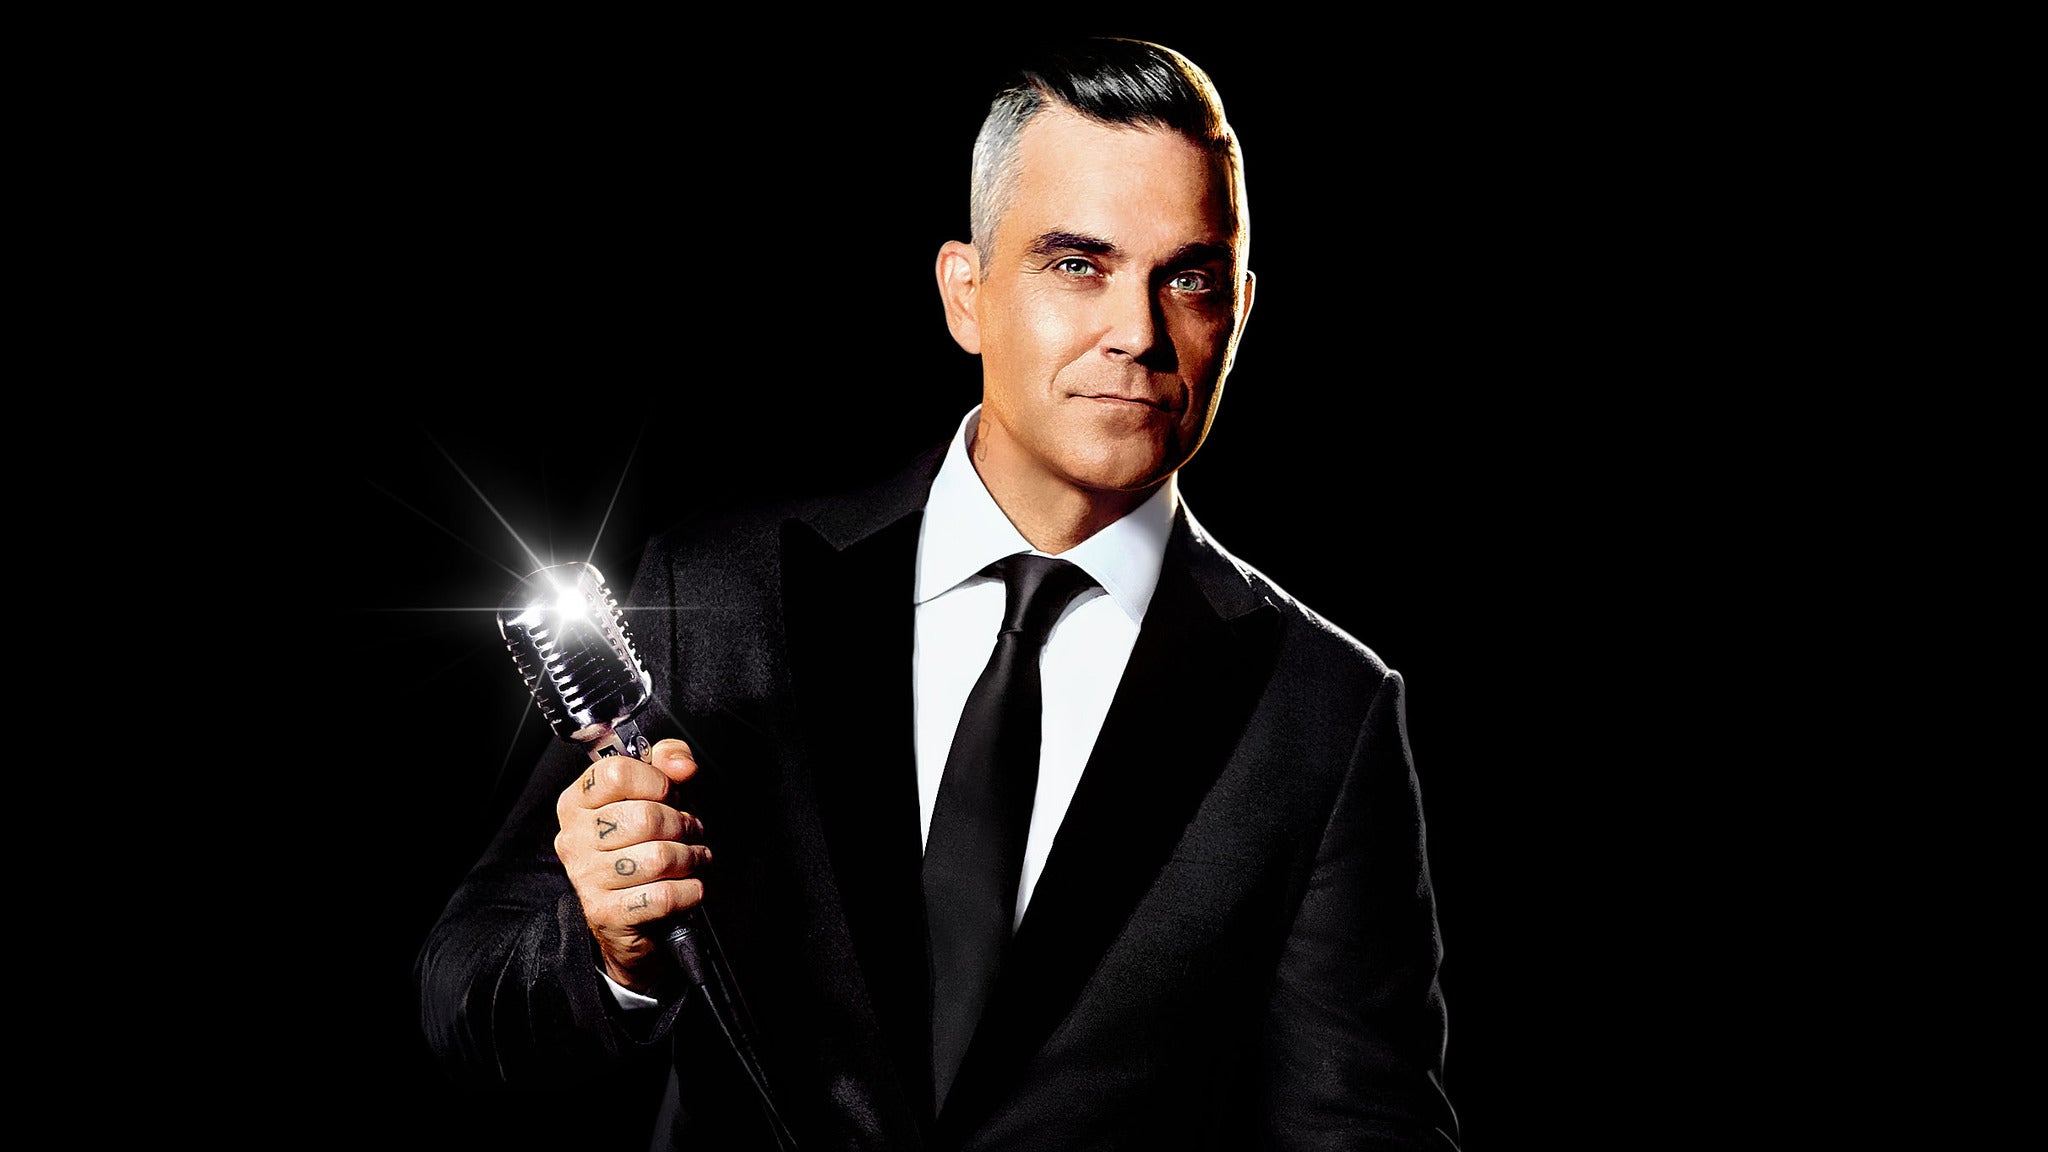 Robbie Williams Live in Las Vegas in Las Vegas promo photo for American Express® Card Member presale offer code